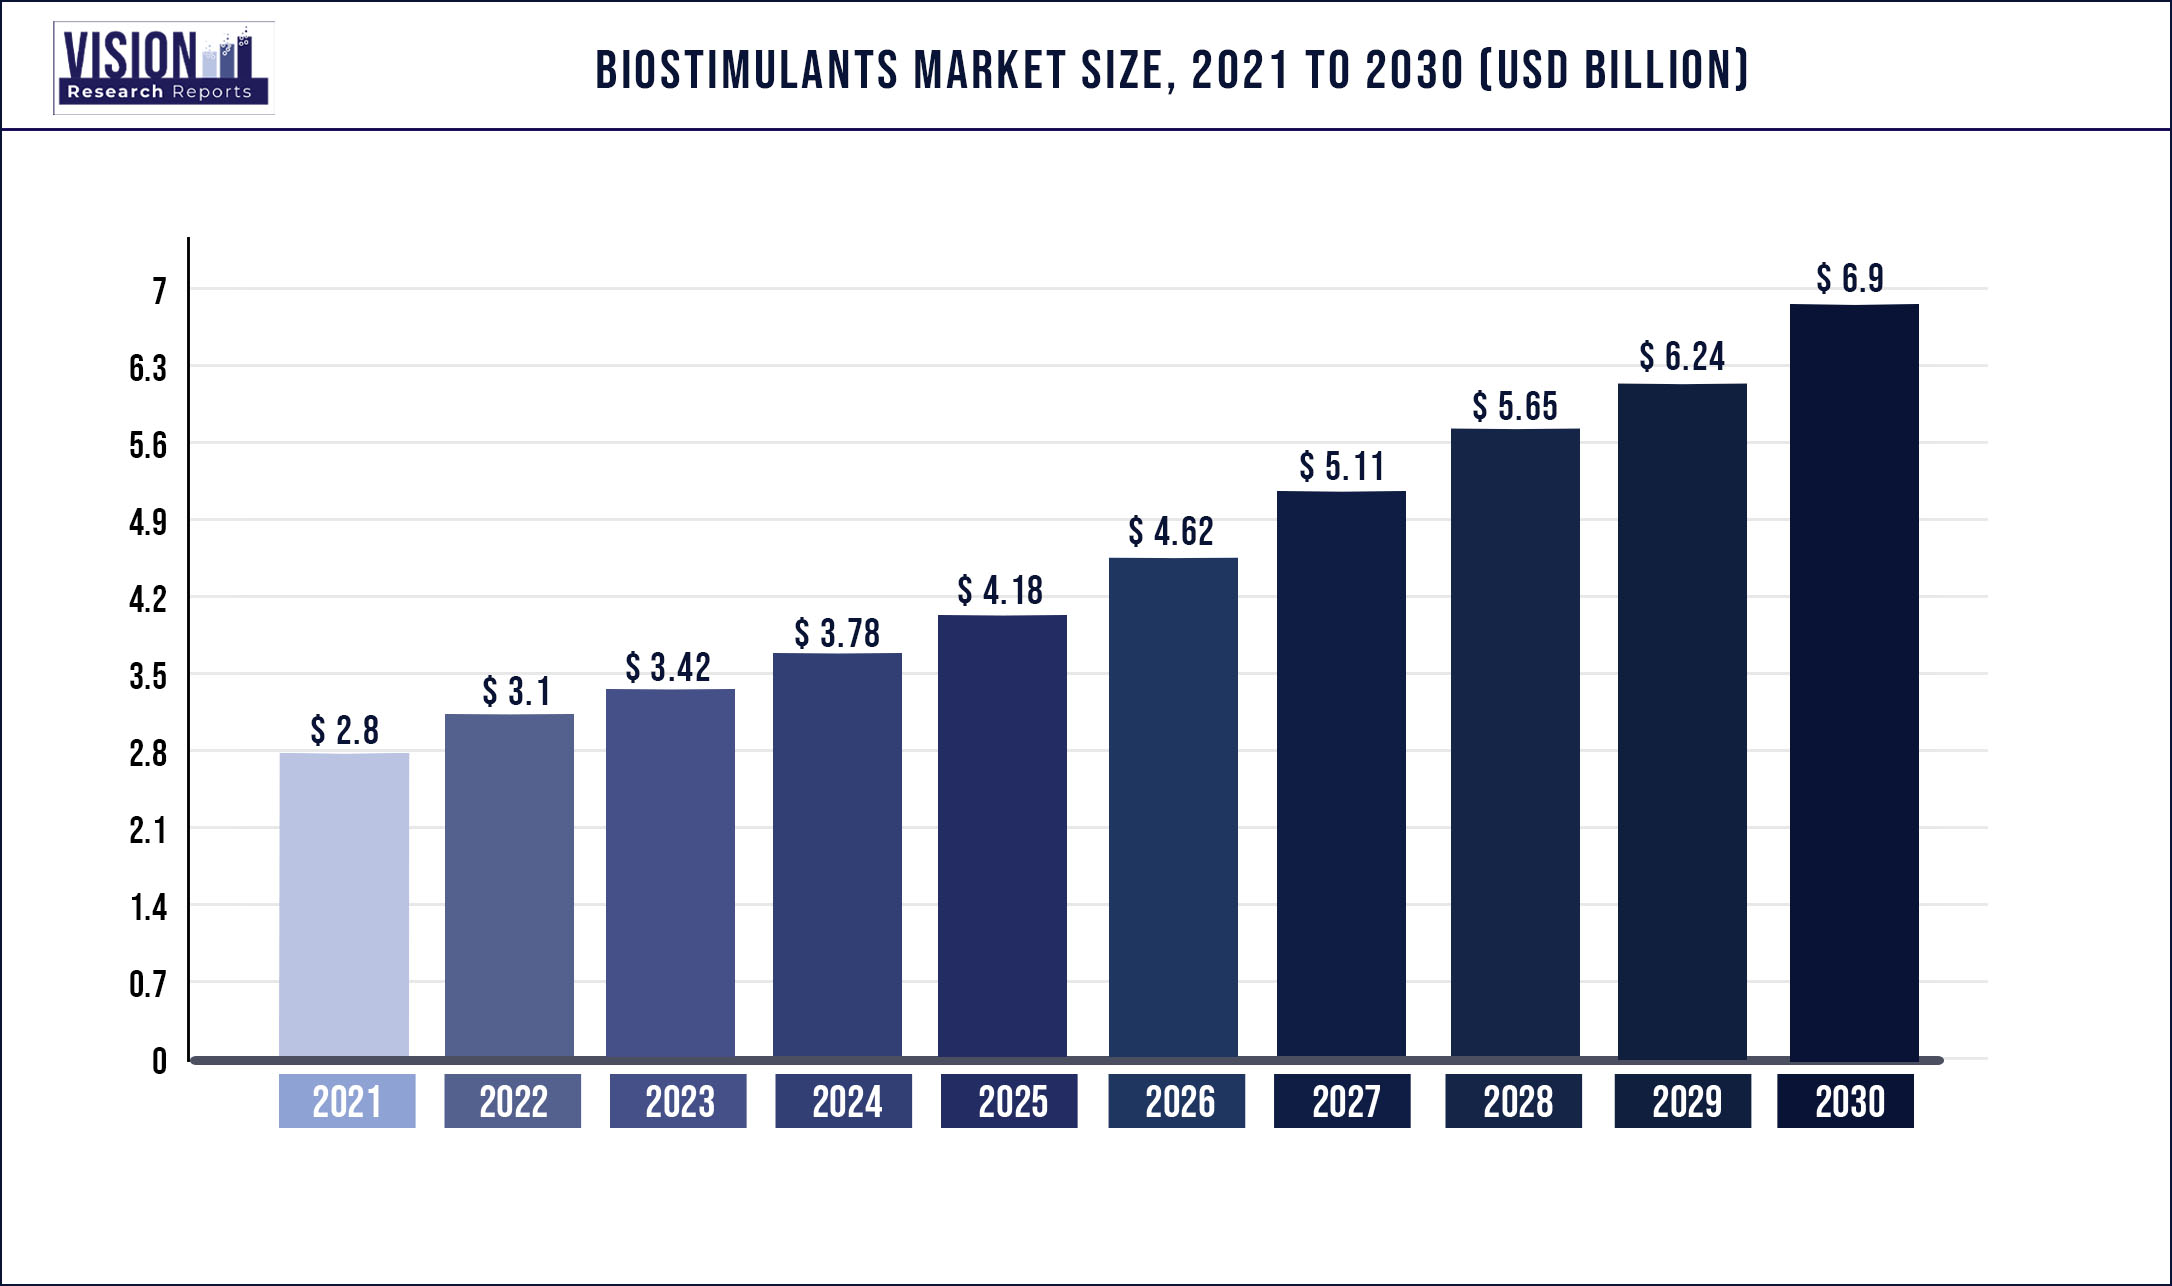 Biostimulants Market Size 2021 to 2030